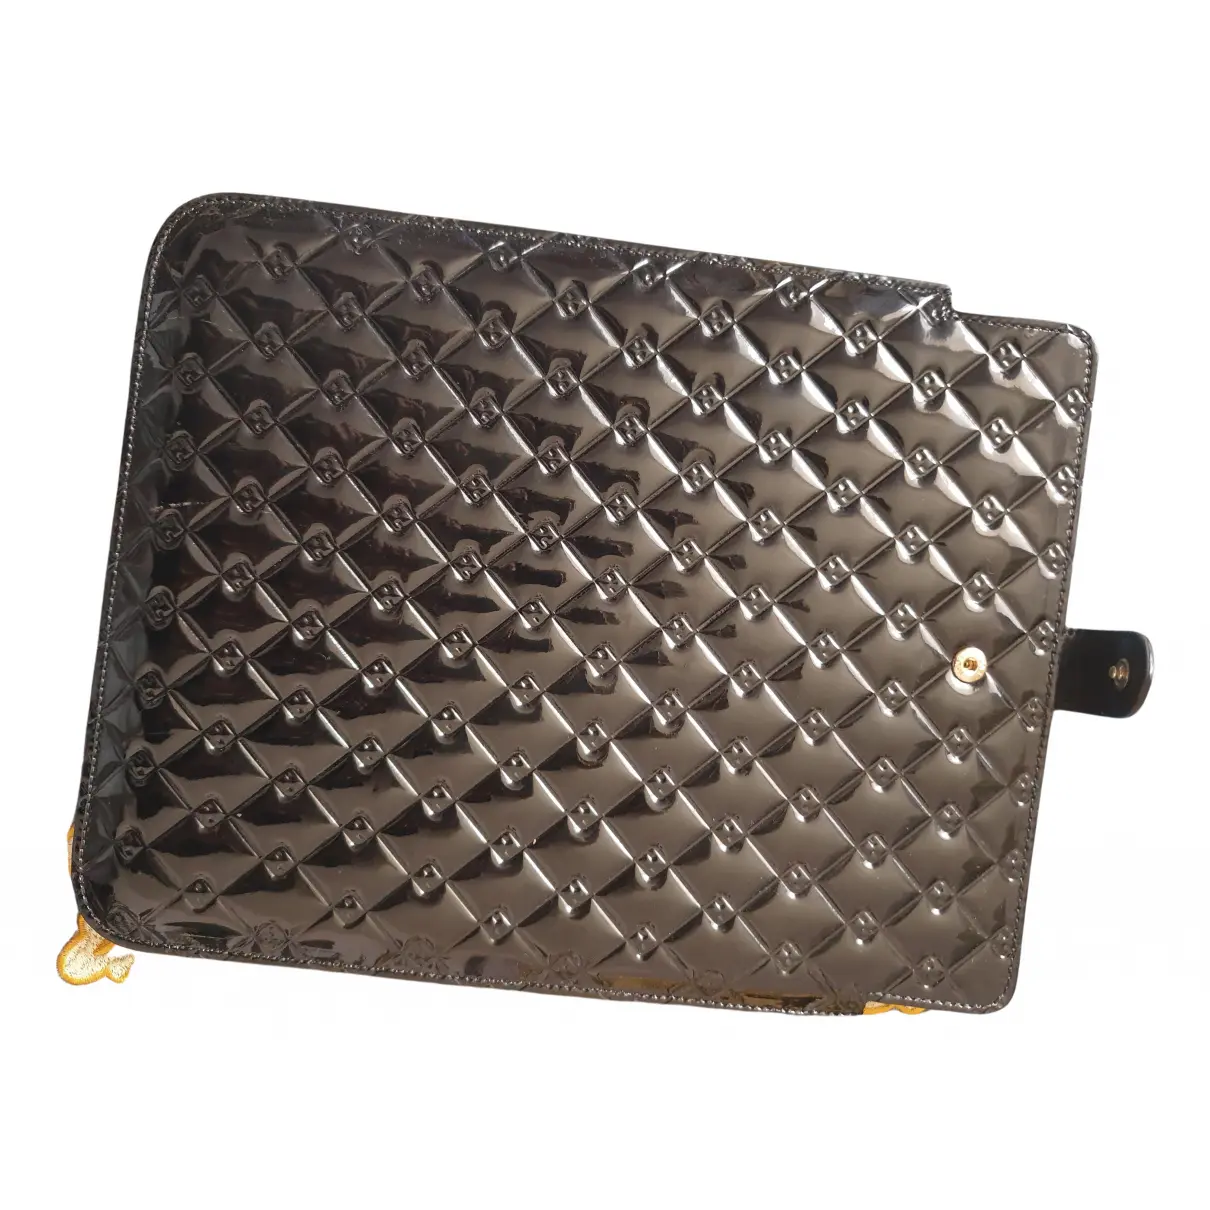 Patent leather purse Fendi